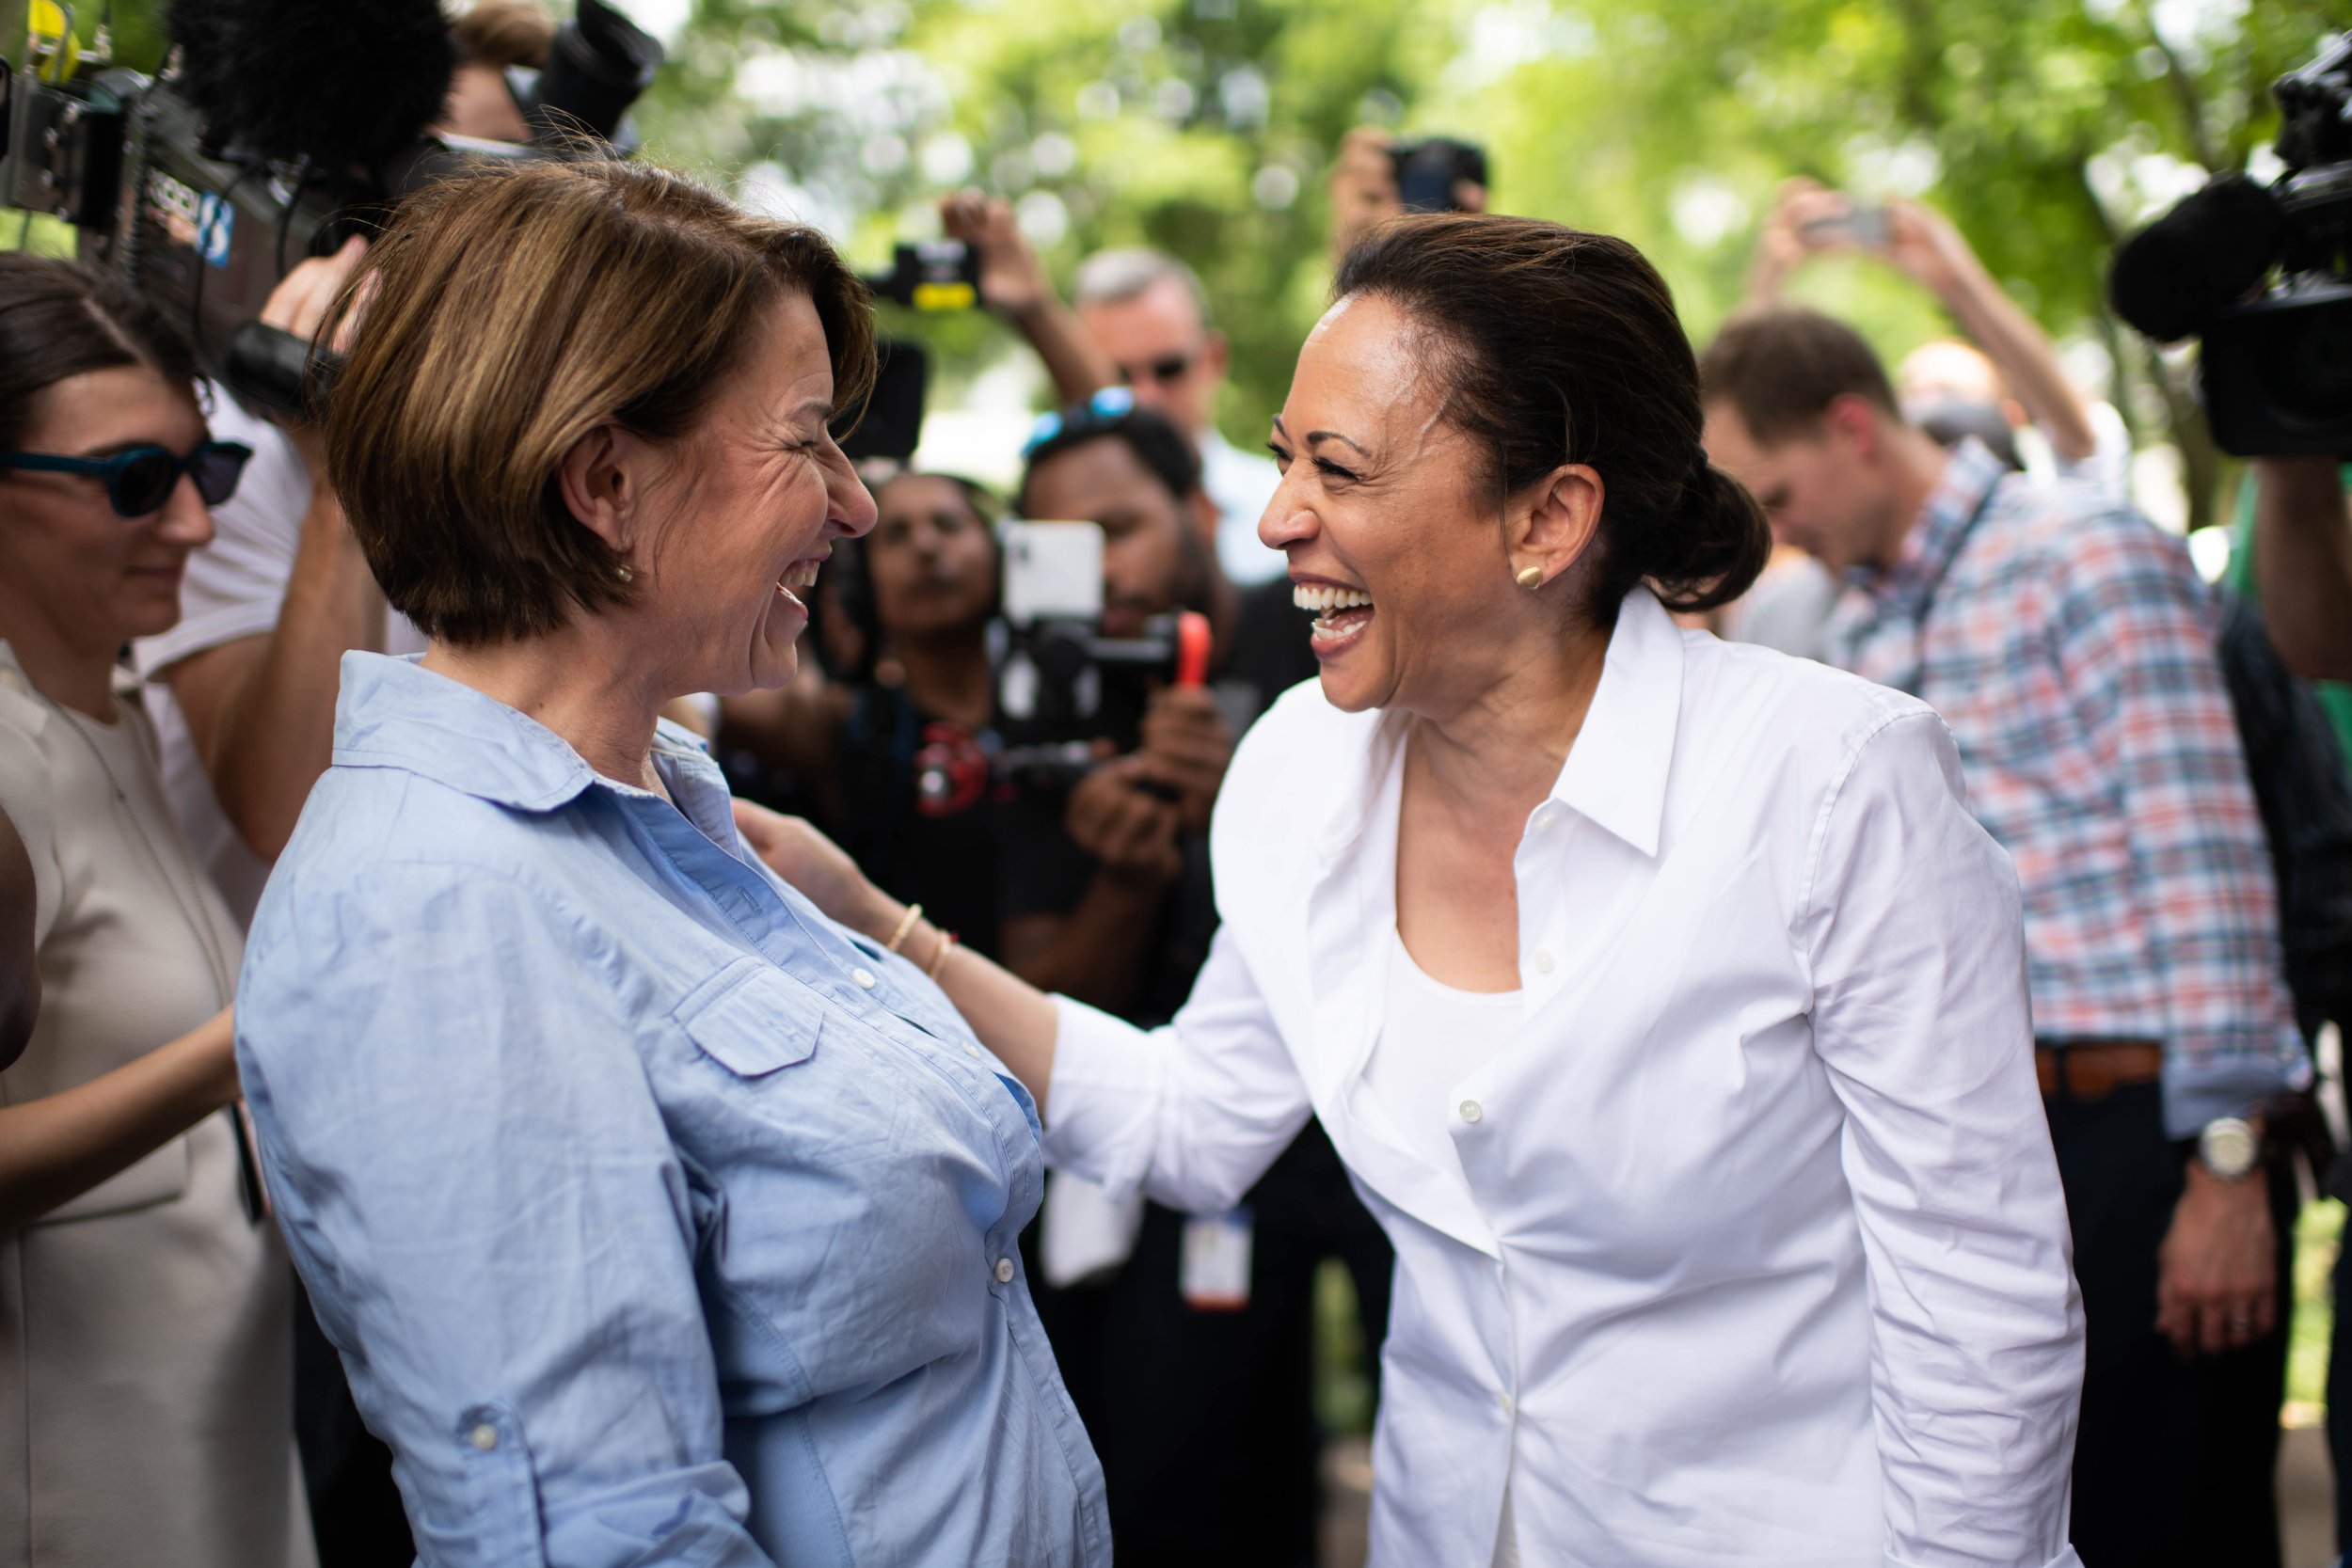 U.S. Senator's Amy Klobuchar and Kamala Harris at a presidential campaign rally in Iowa, 2019